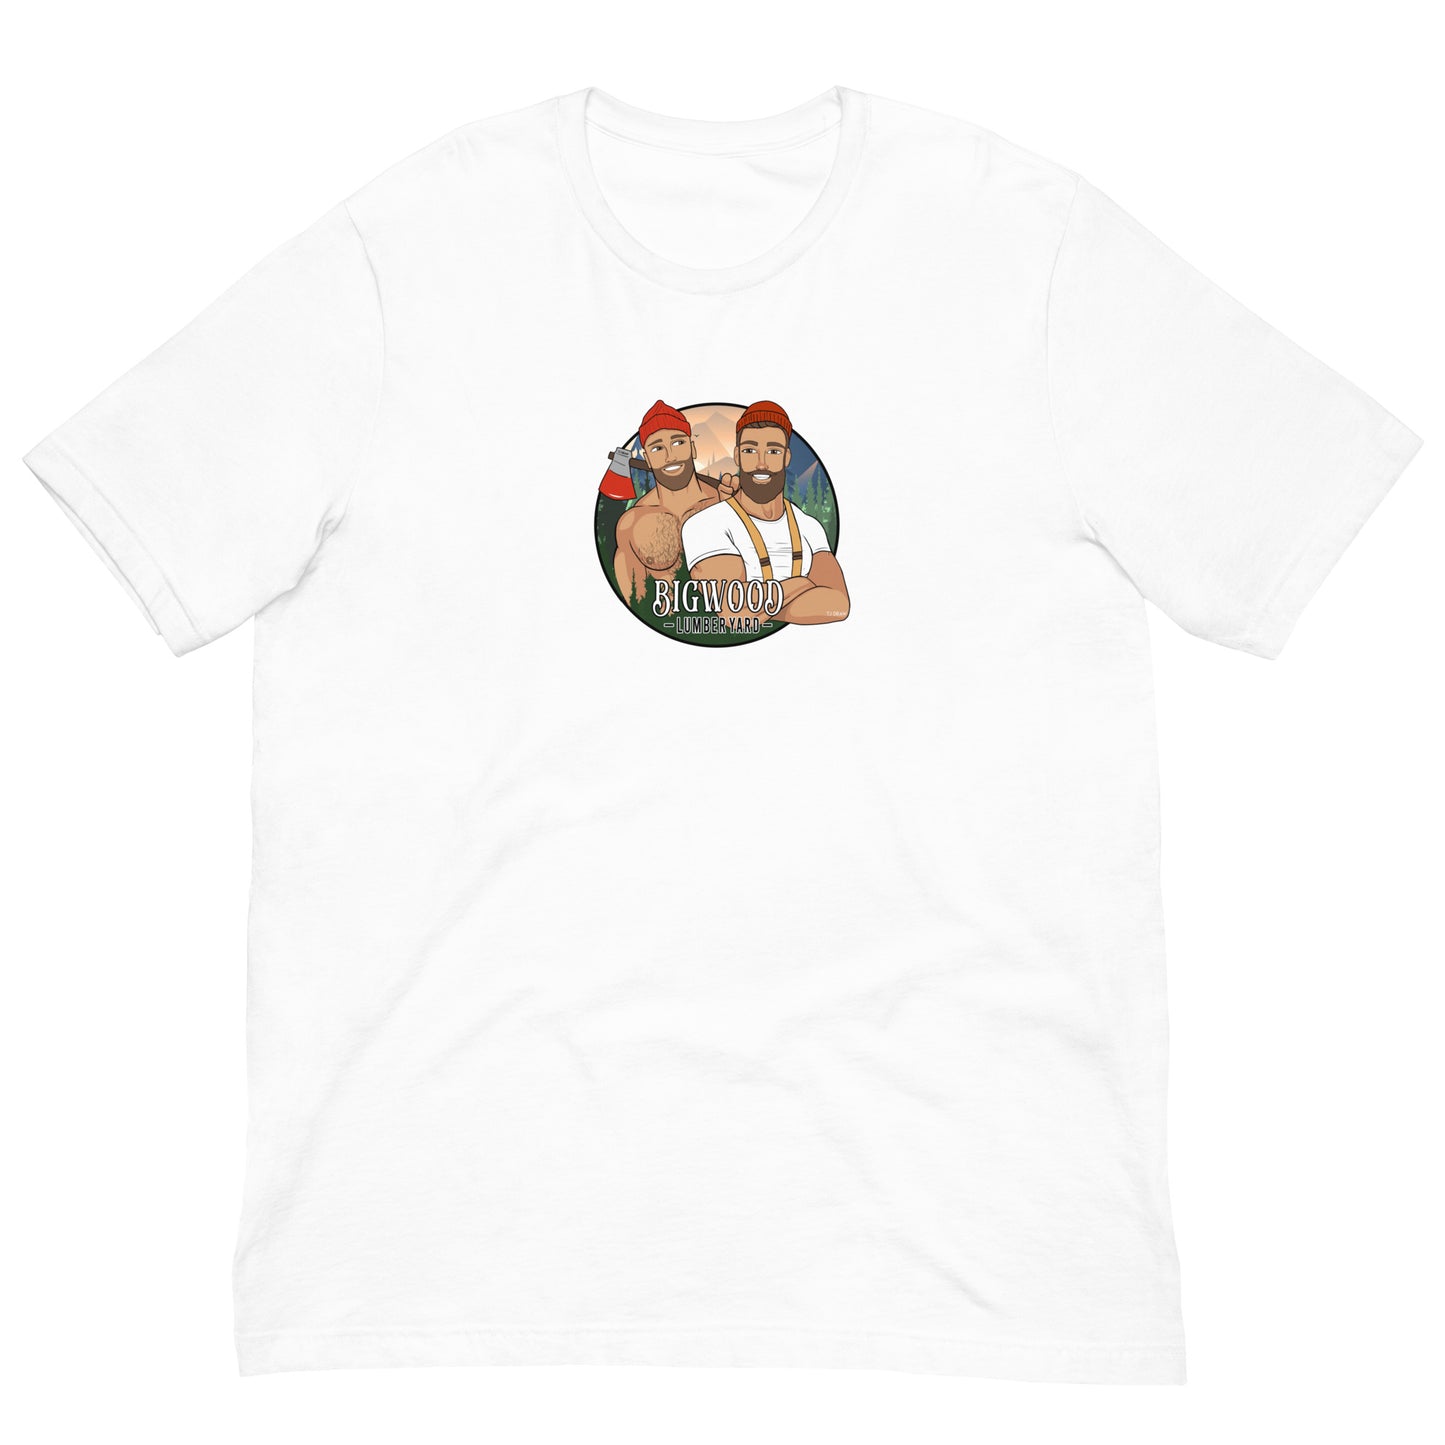 Lumberjack t-shirt